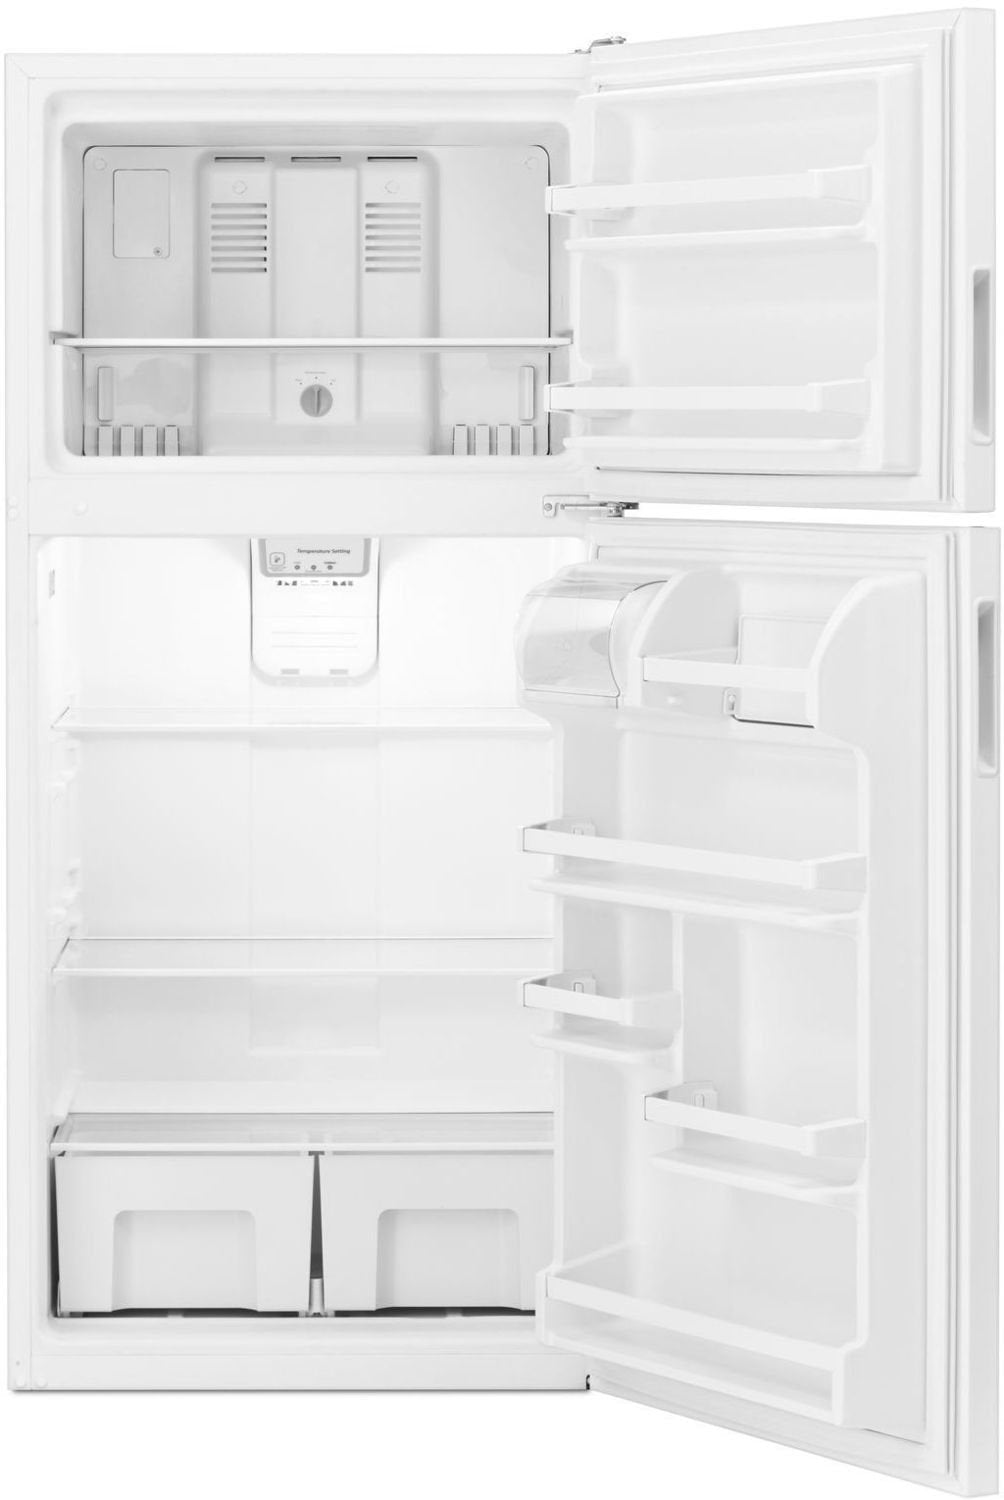 Amana Stainless Steel Top-Freezer Refrigerator (18 Cu. Ft.) - ART318FFDS